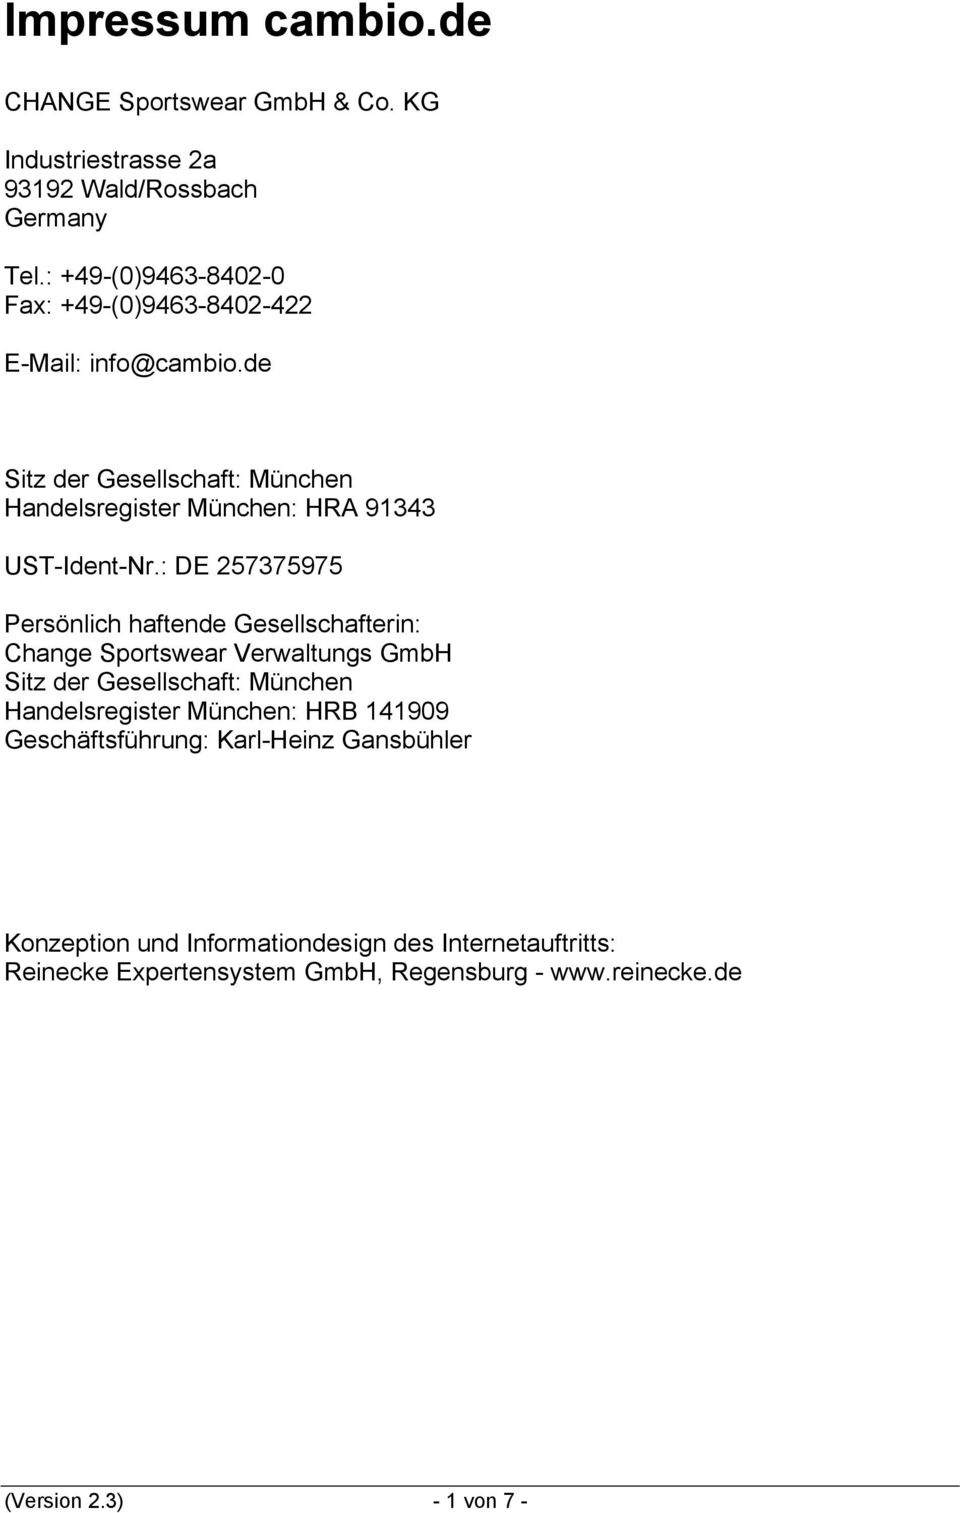 Impressum cambio.de. CHANGE Sportswear GmbH & Co. KG. Industriestrasse 2a  Wald/Rossbach Germany - PDF Free Download